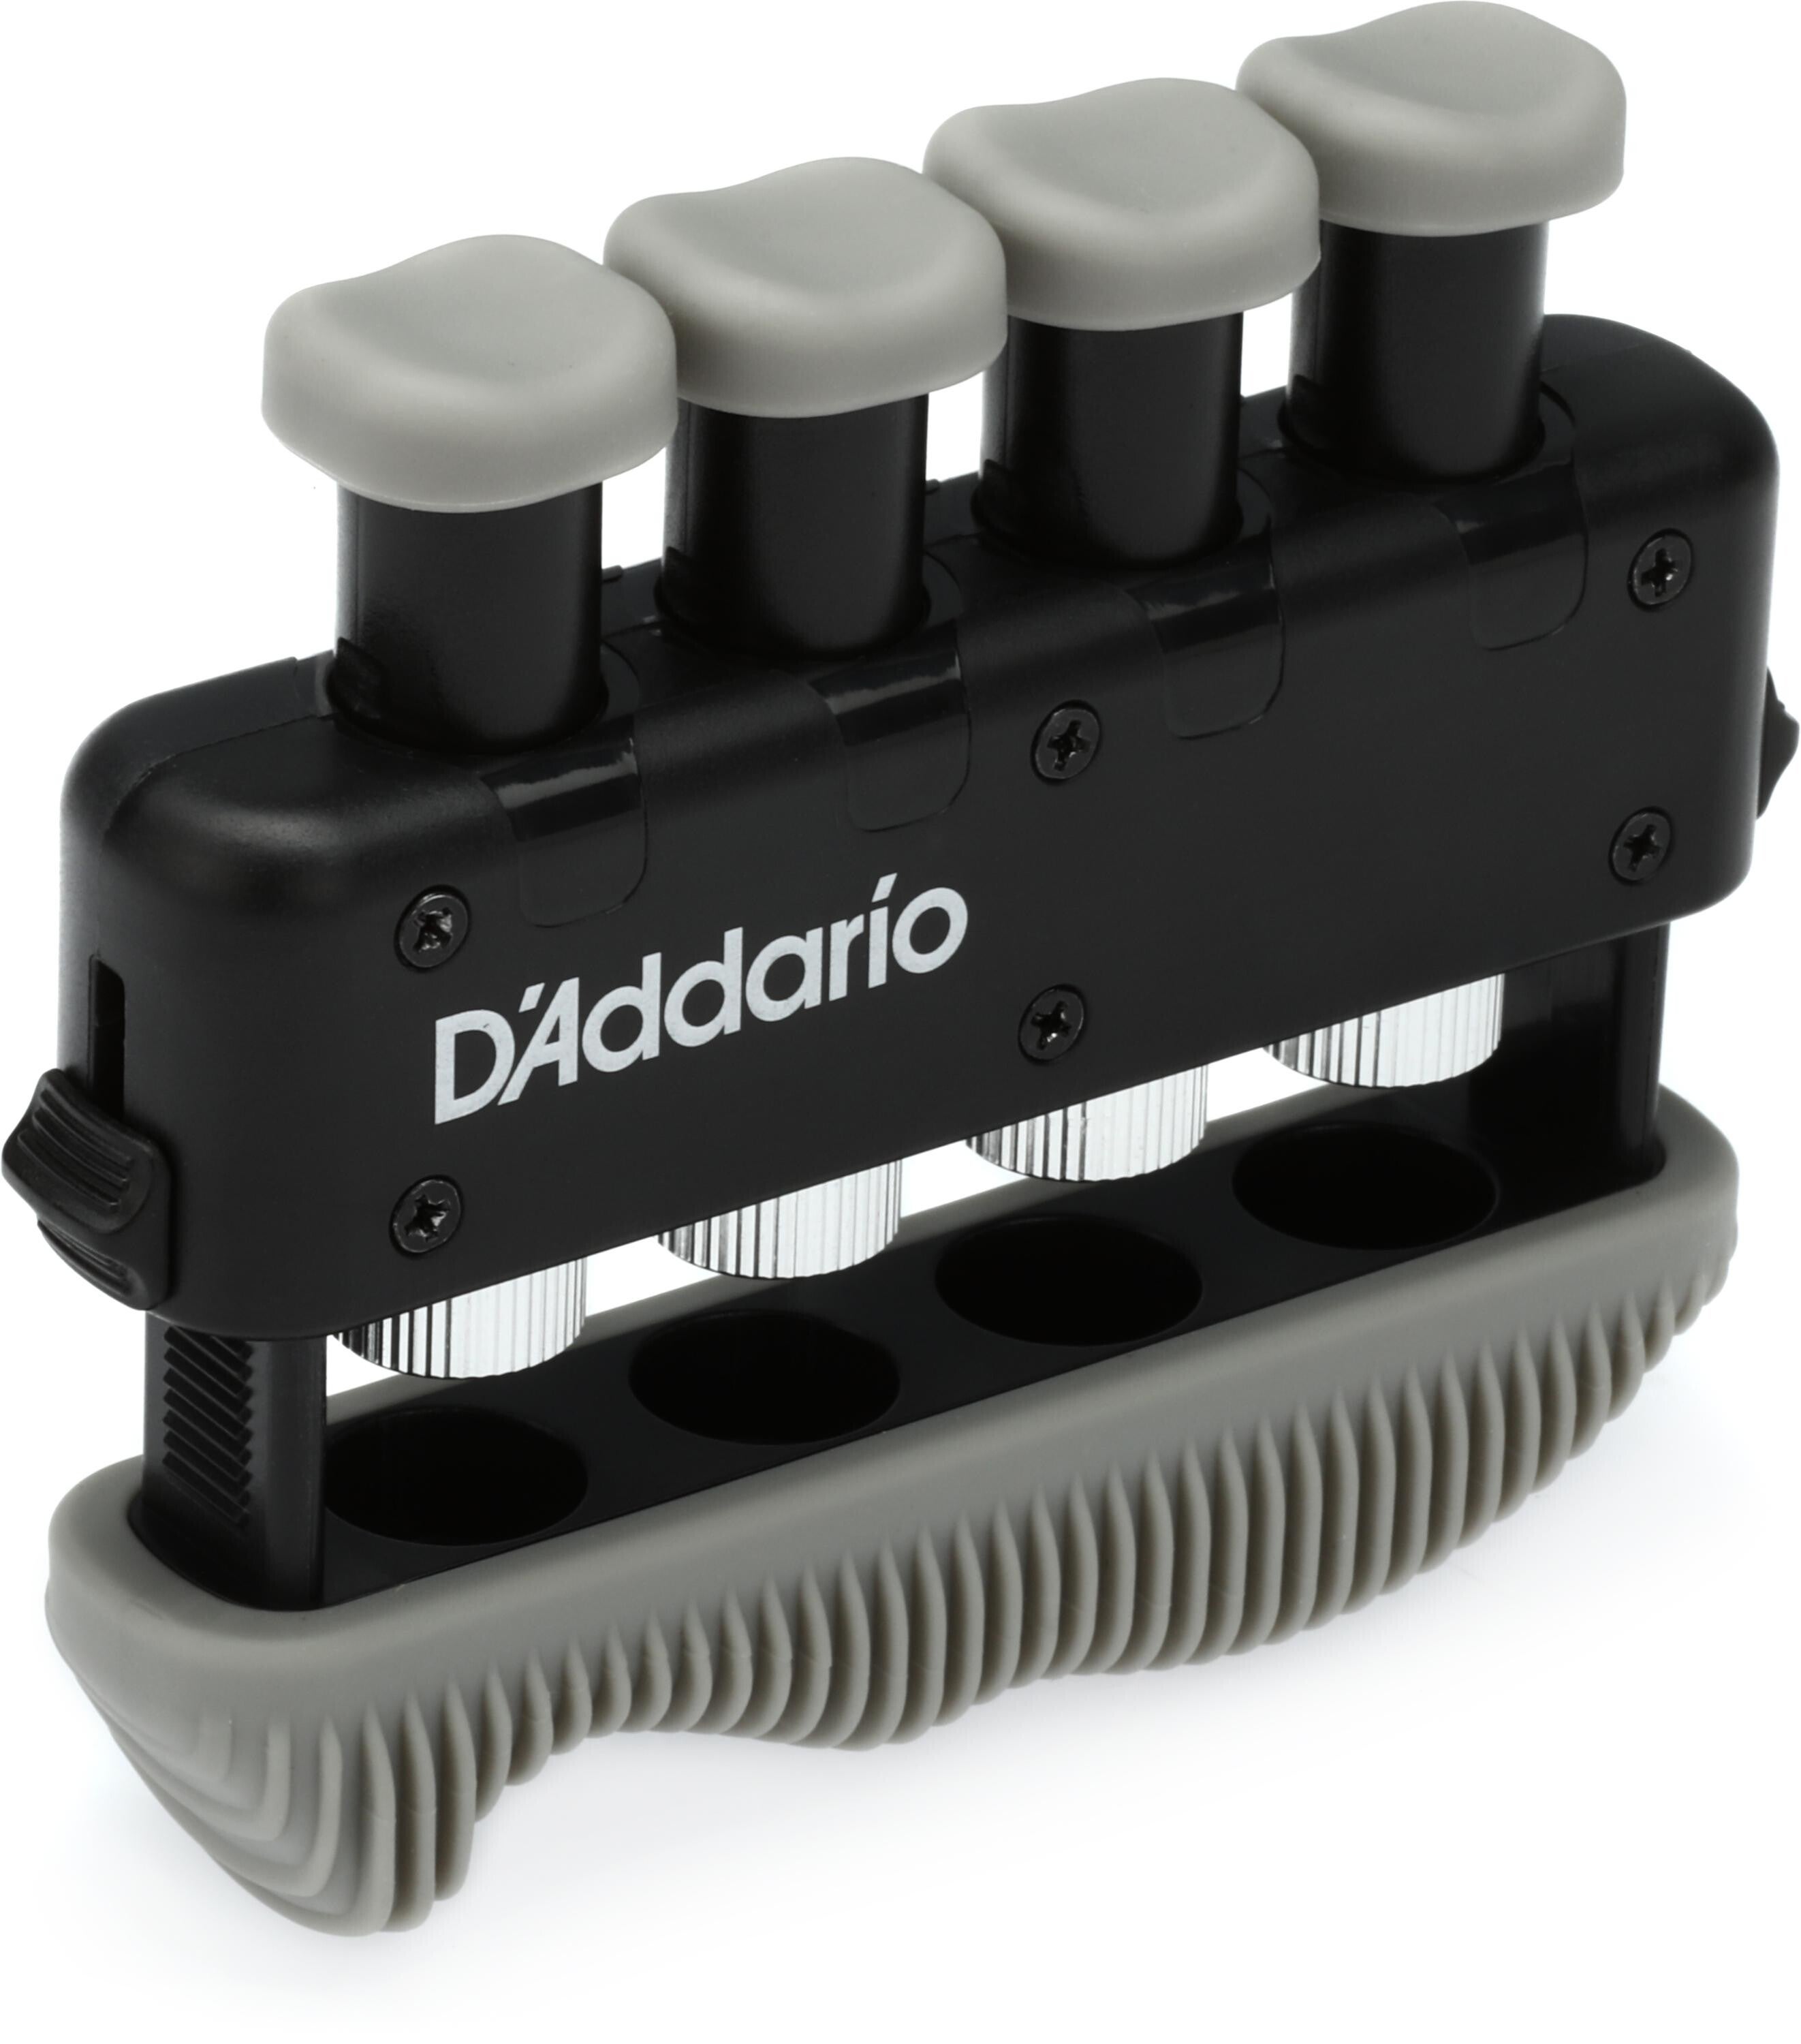 Bundled Item: D'Addario Varigrip Plus Adjustable Hand Exerciser